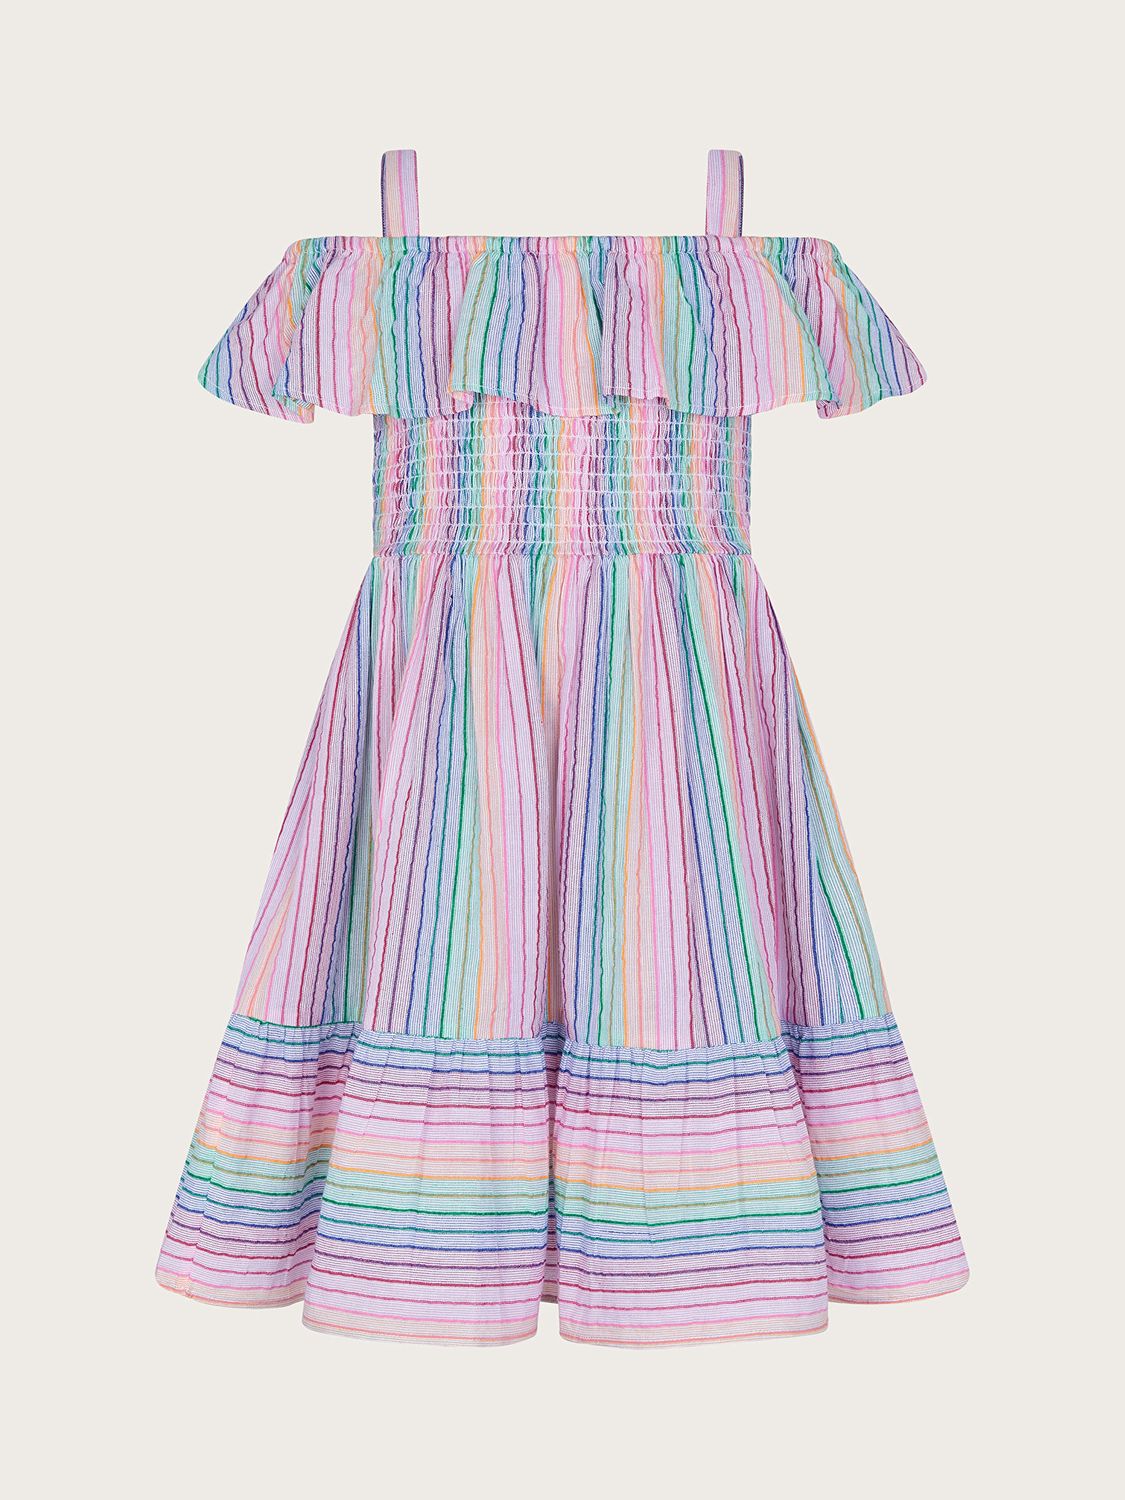 Monsoon Kids' Stripe Frill Beach Midi Dress, Multi, 3-4 years